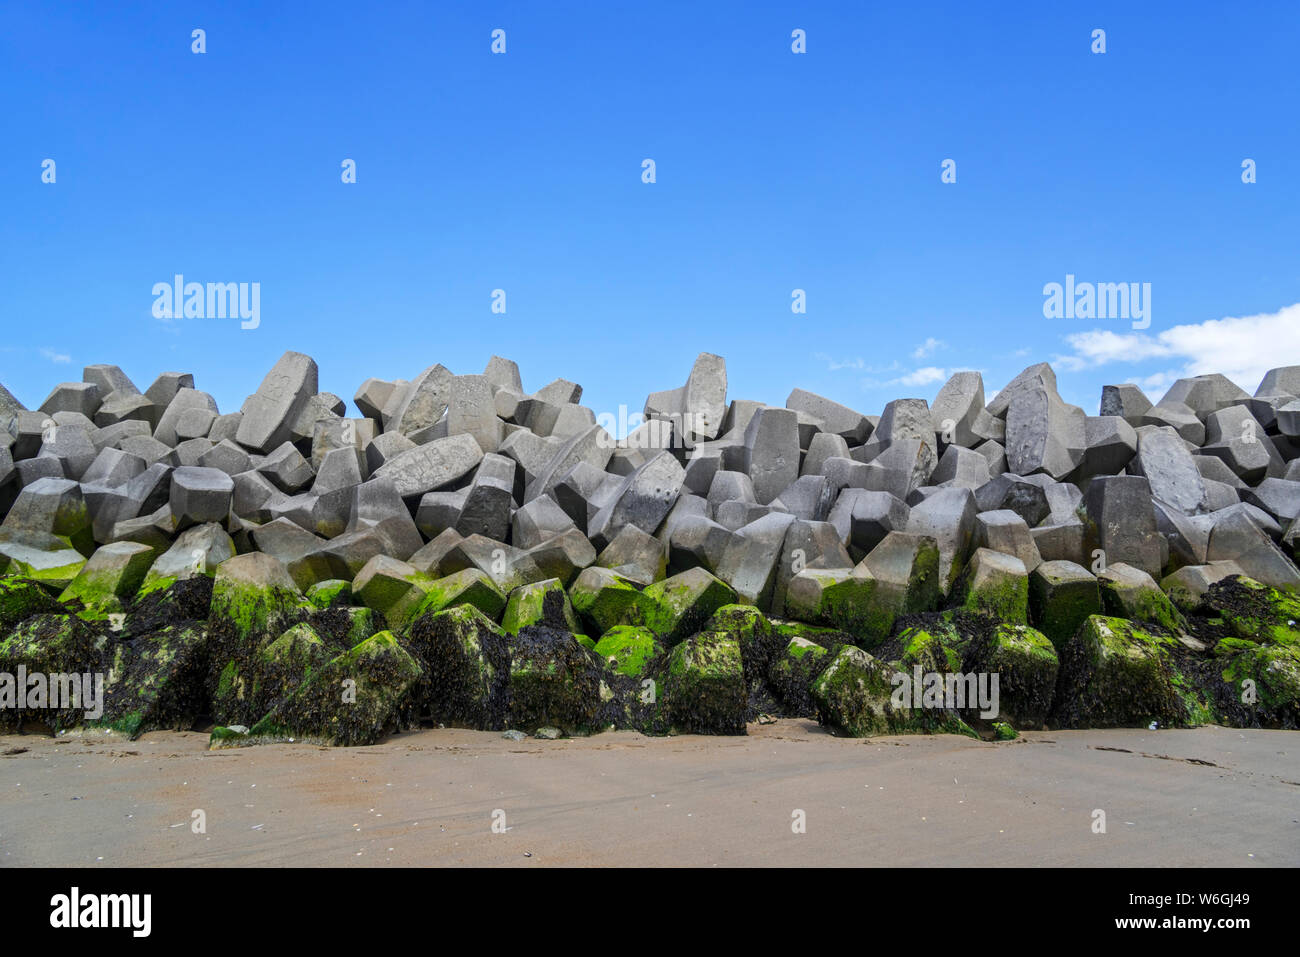 Mound type sea wall / seawall / dam made of concrete blocks, coastal defense at Grand-Fort-Philippe, Pas-de-Calais, Hauts-de-France, France Stock Photo